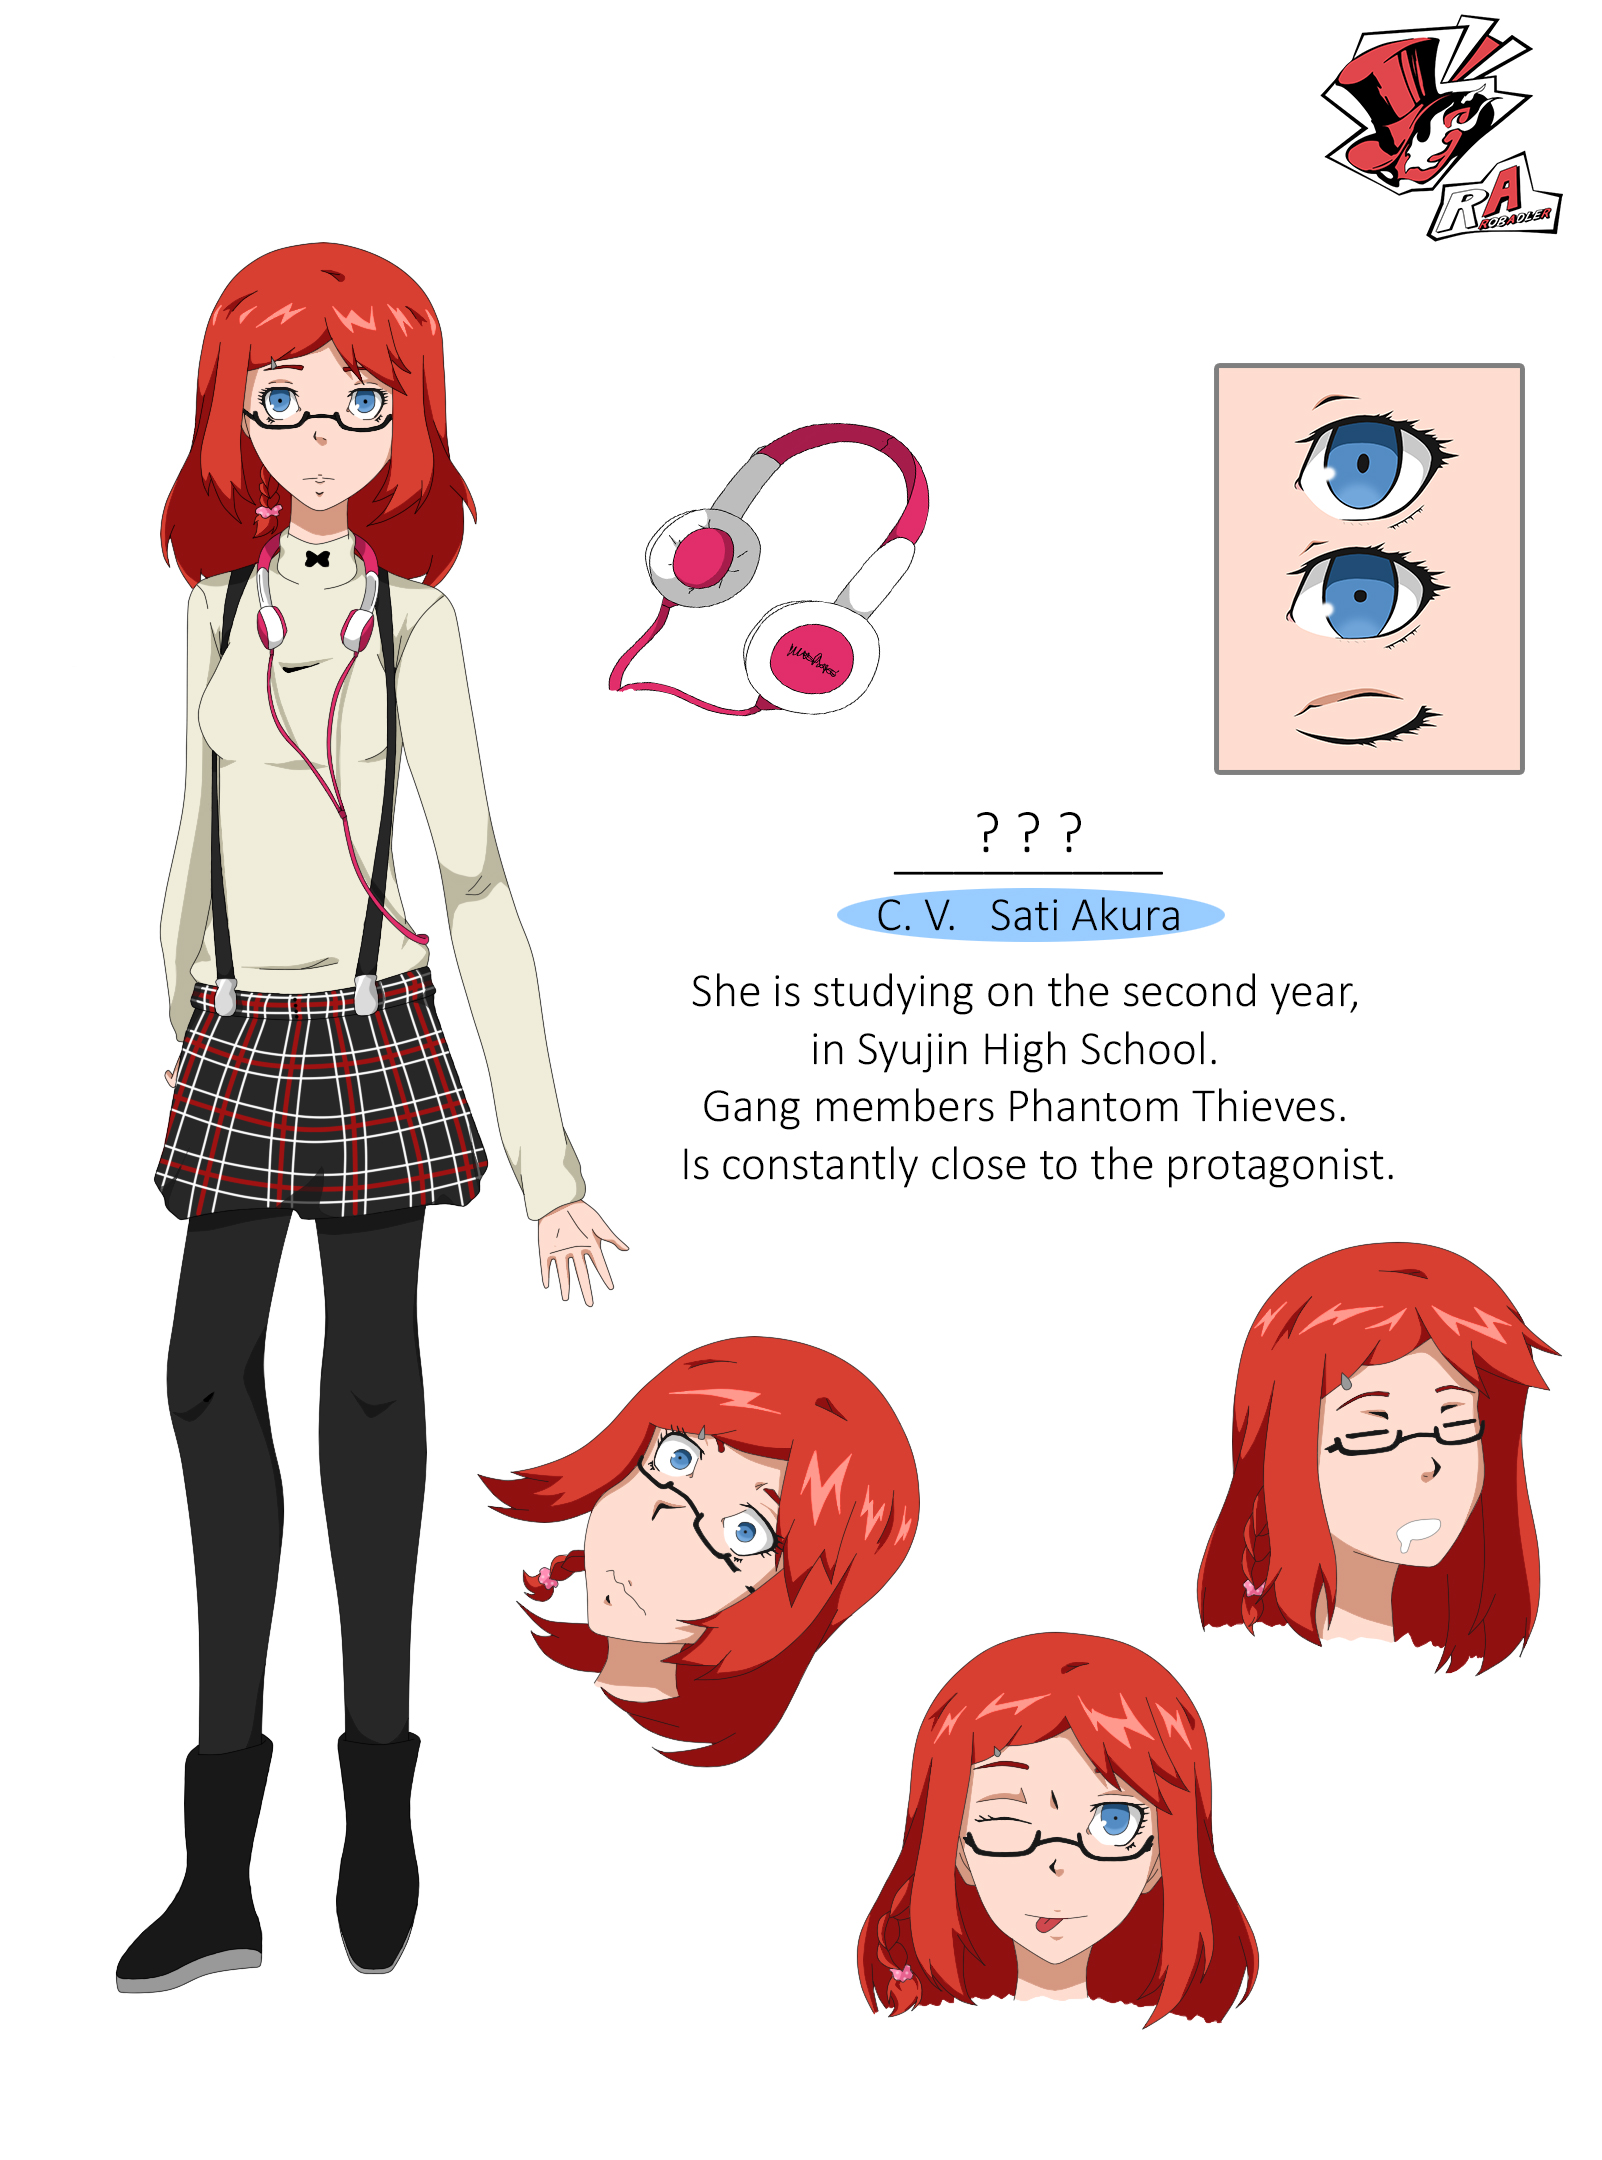 Persona 5 Concept Art & Characters